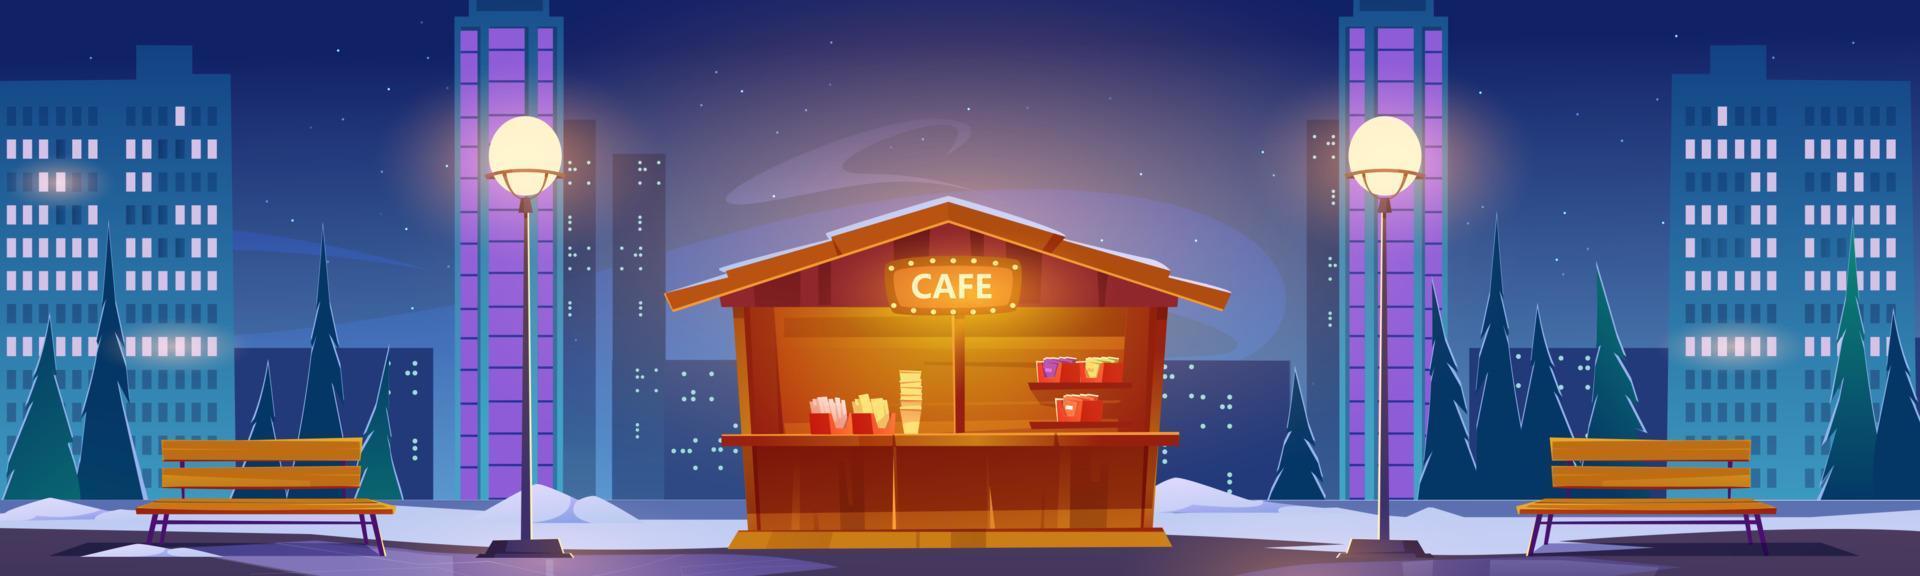 straat Fast food cafe Bij winter nacht stadsgezicht vector